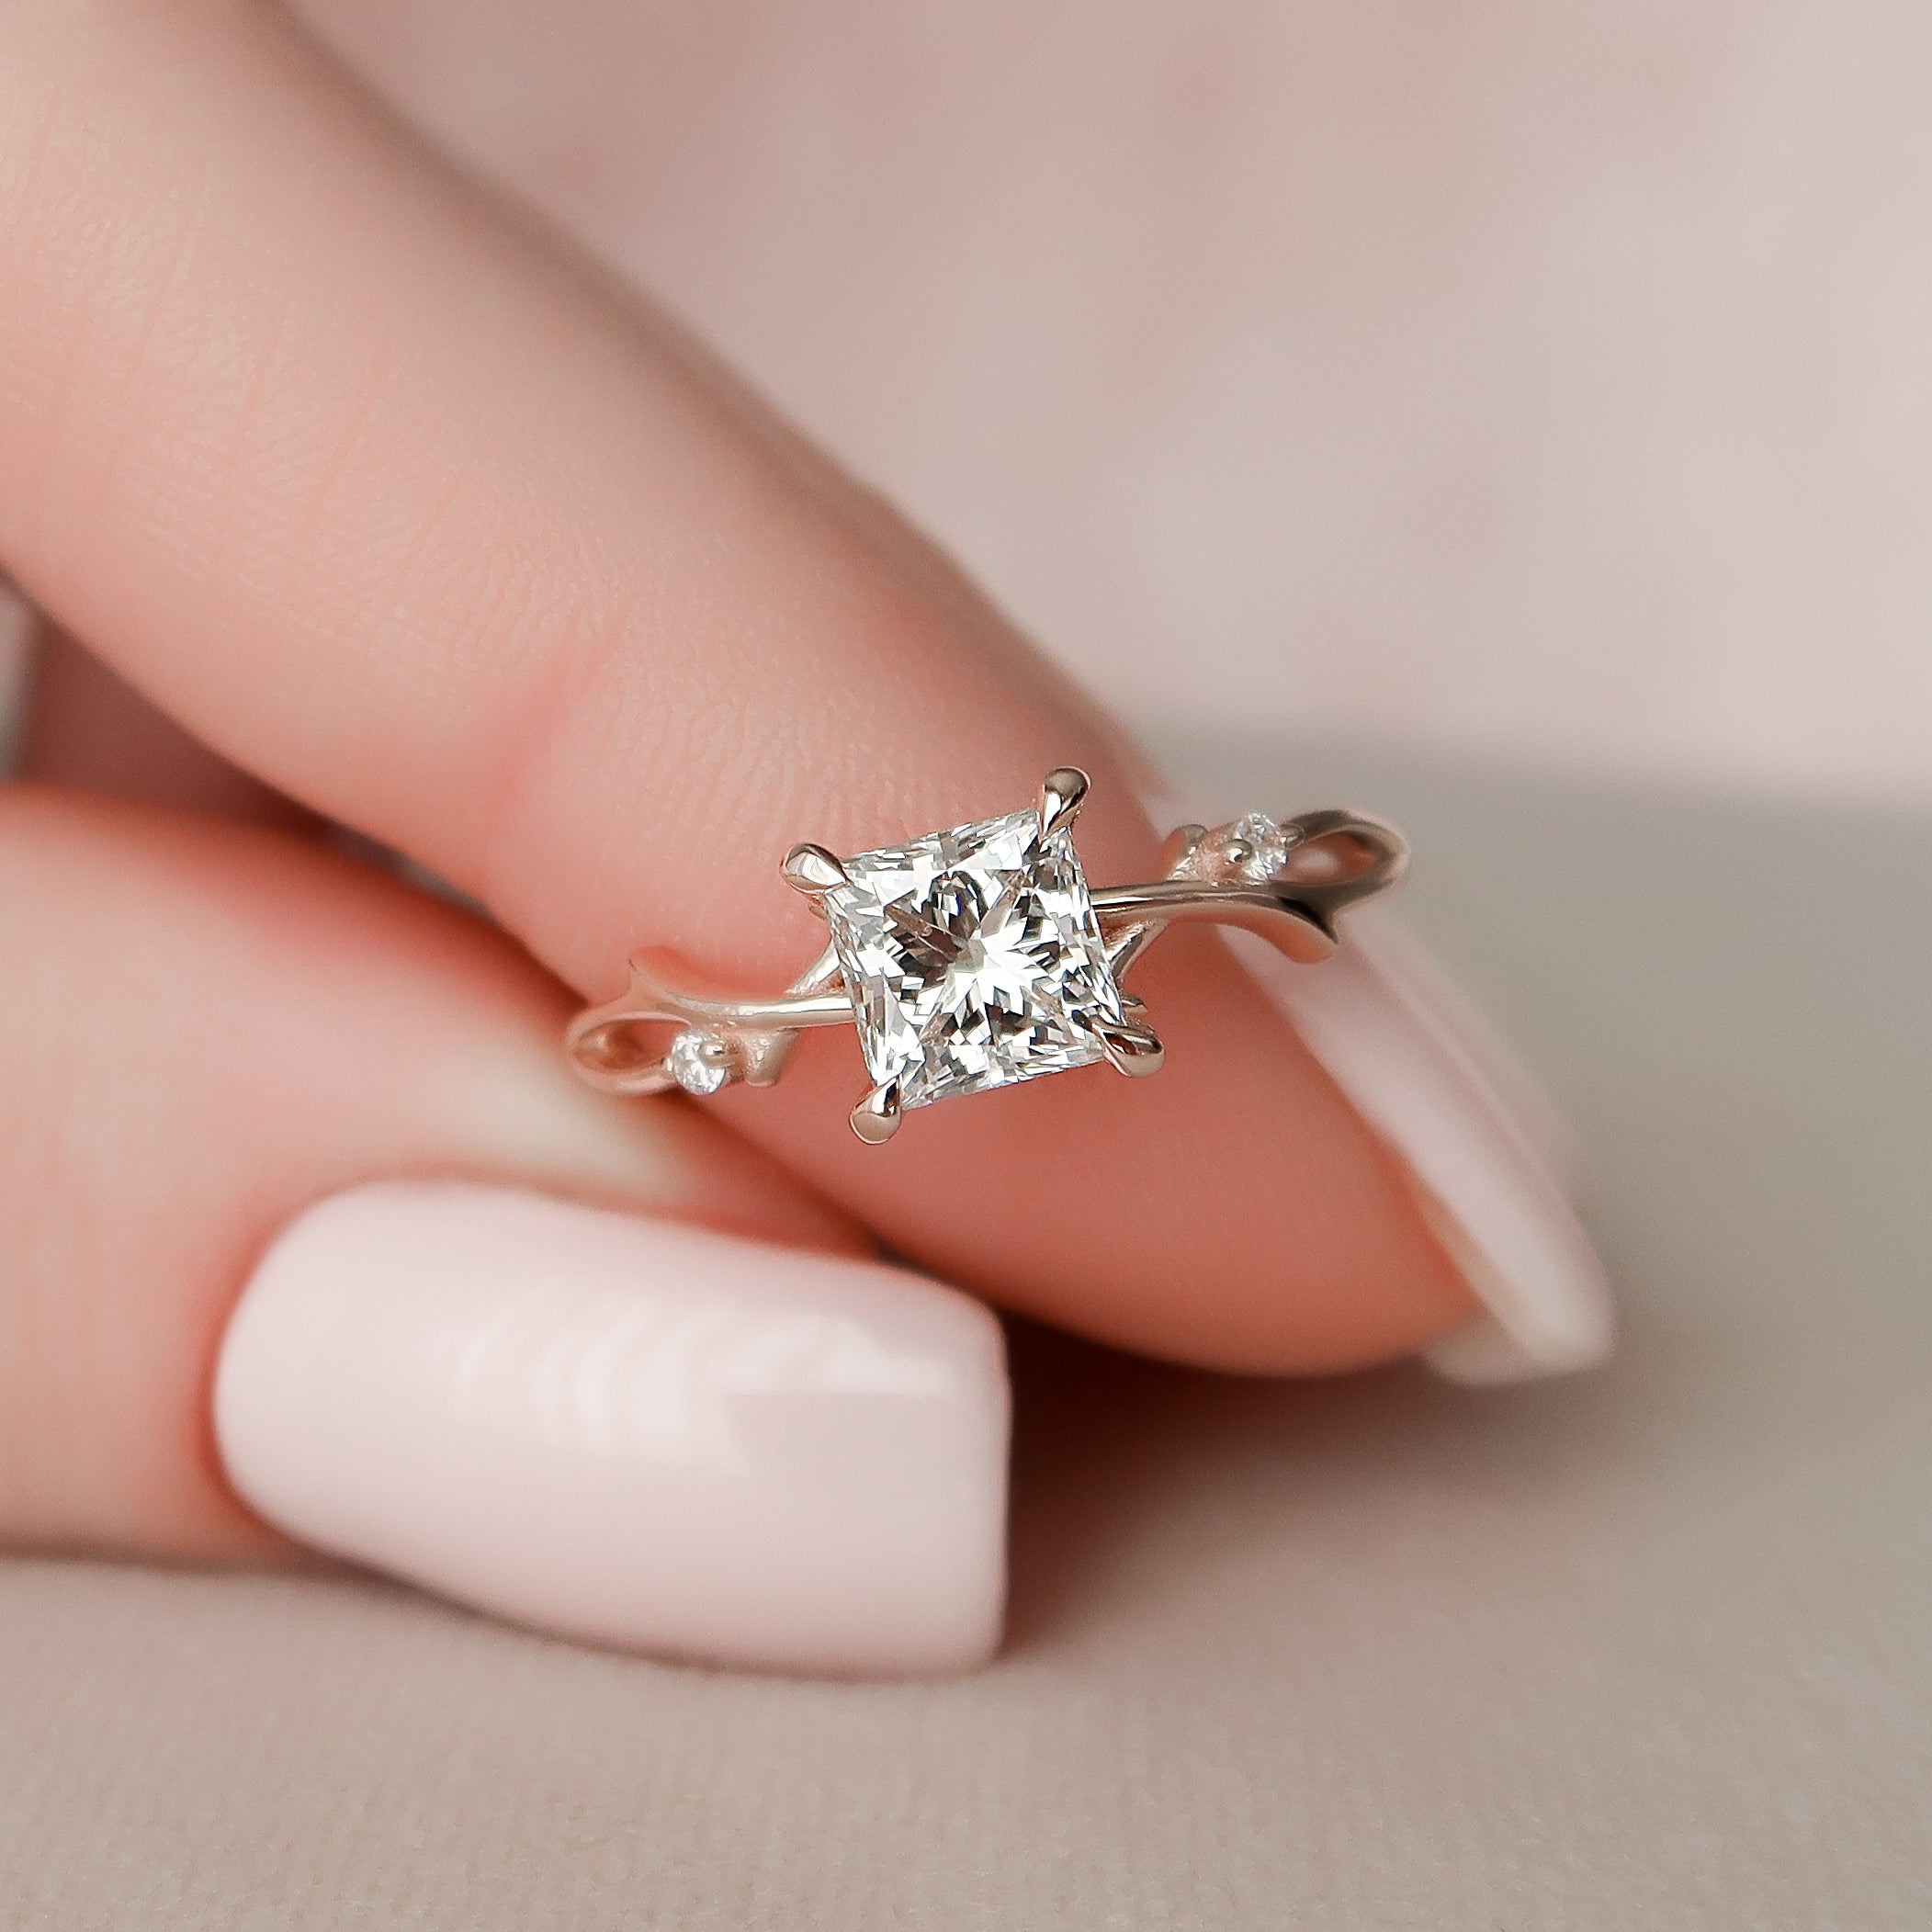 5 Reasons Not to Buy a Princess Cut Moissanite Ring